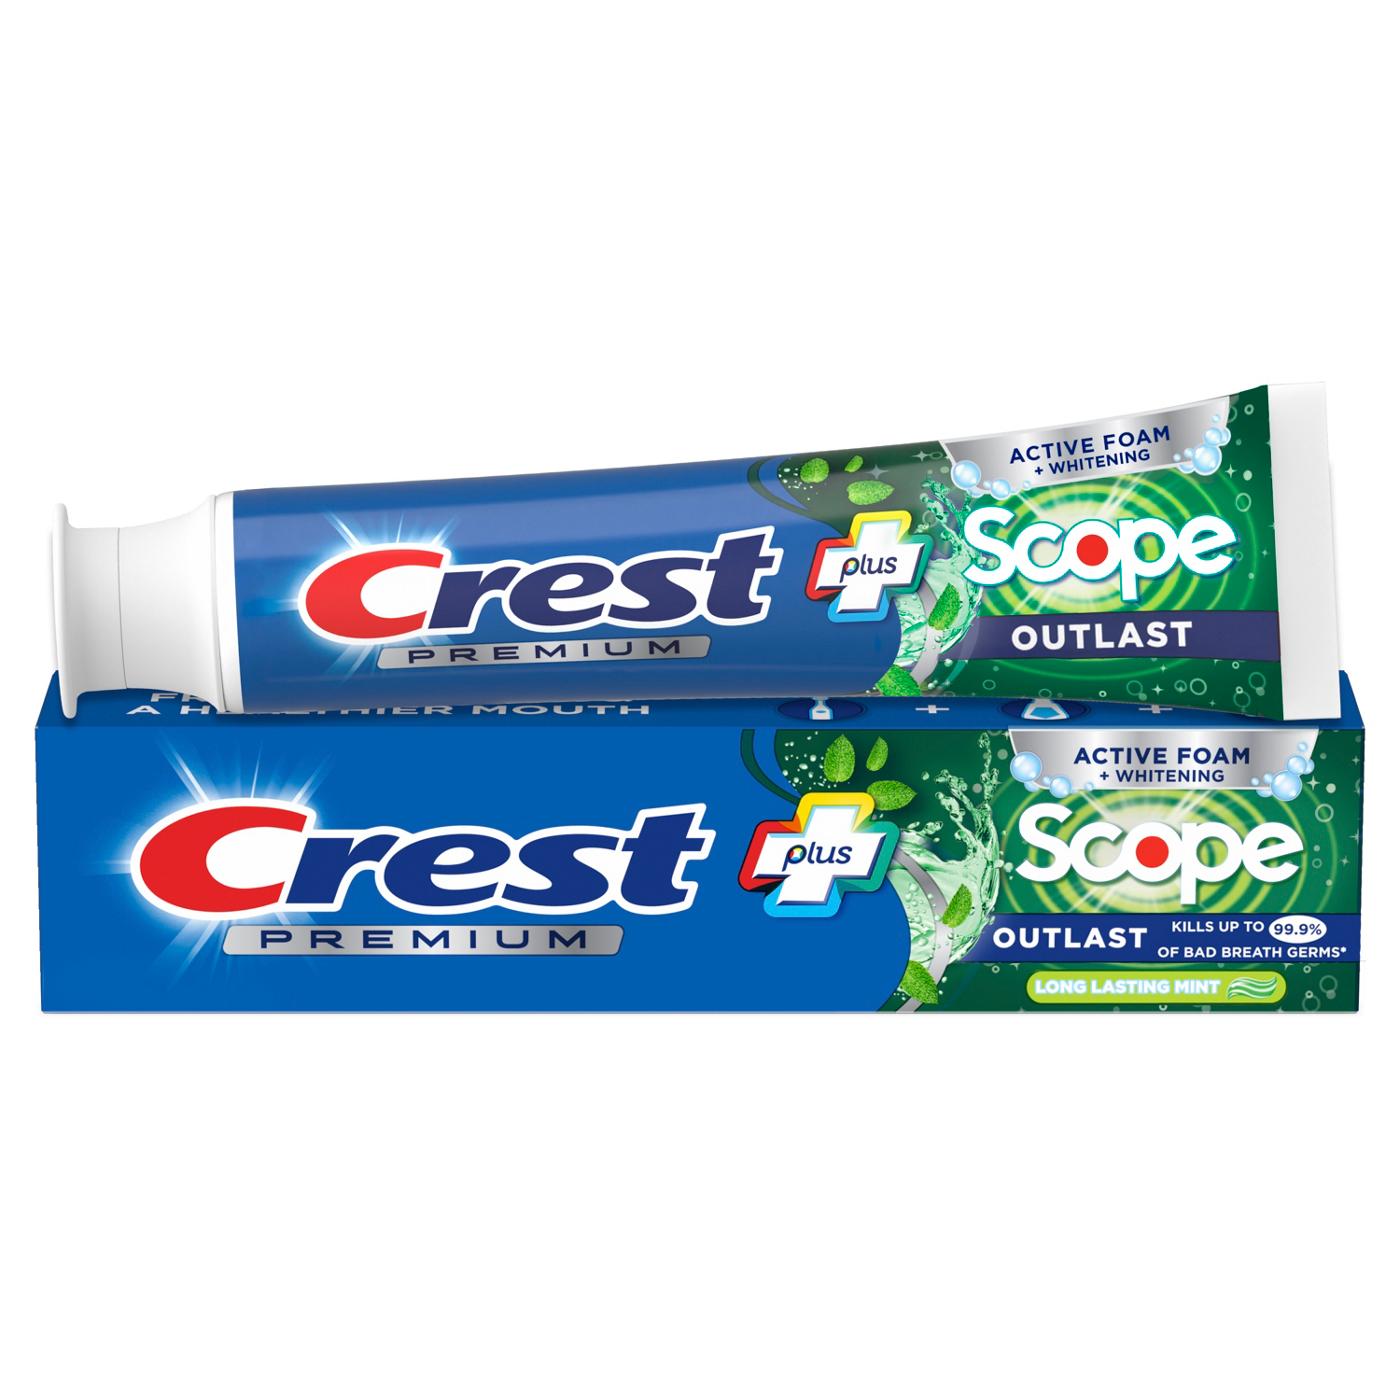 Crest Premium + Scope Outlast Active Foam Toothpaste - Long Lasting Mint; image 2 of 8